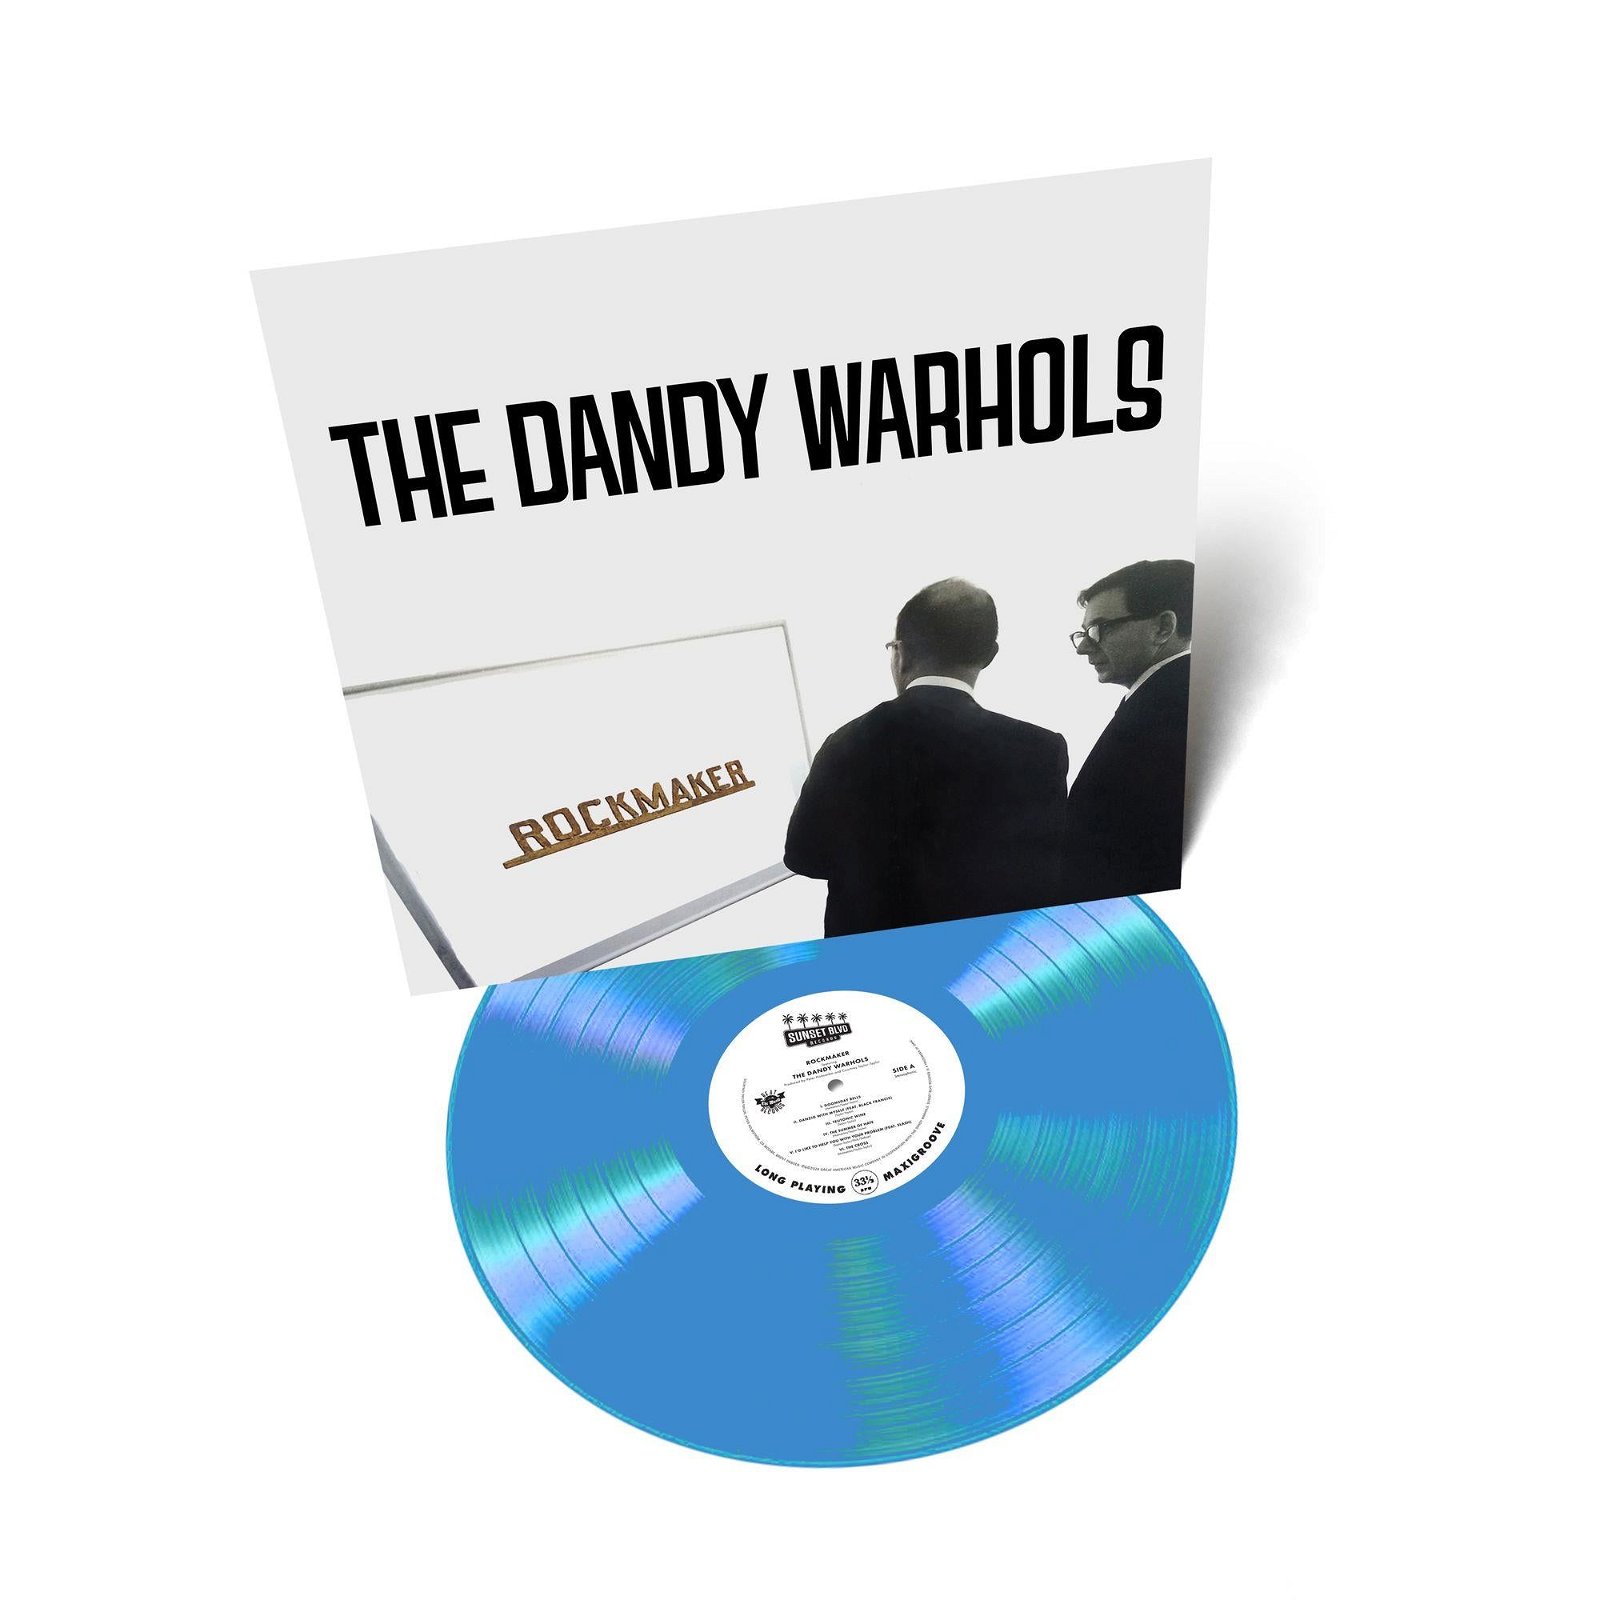 CD Shop - DANDY WARHOLS ROCKMAKER